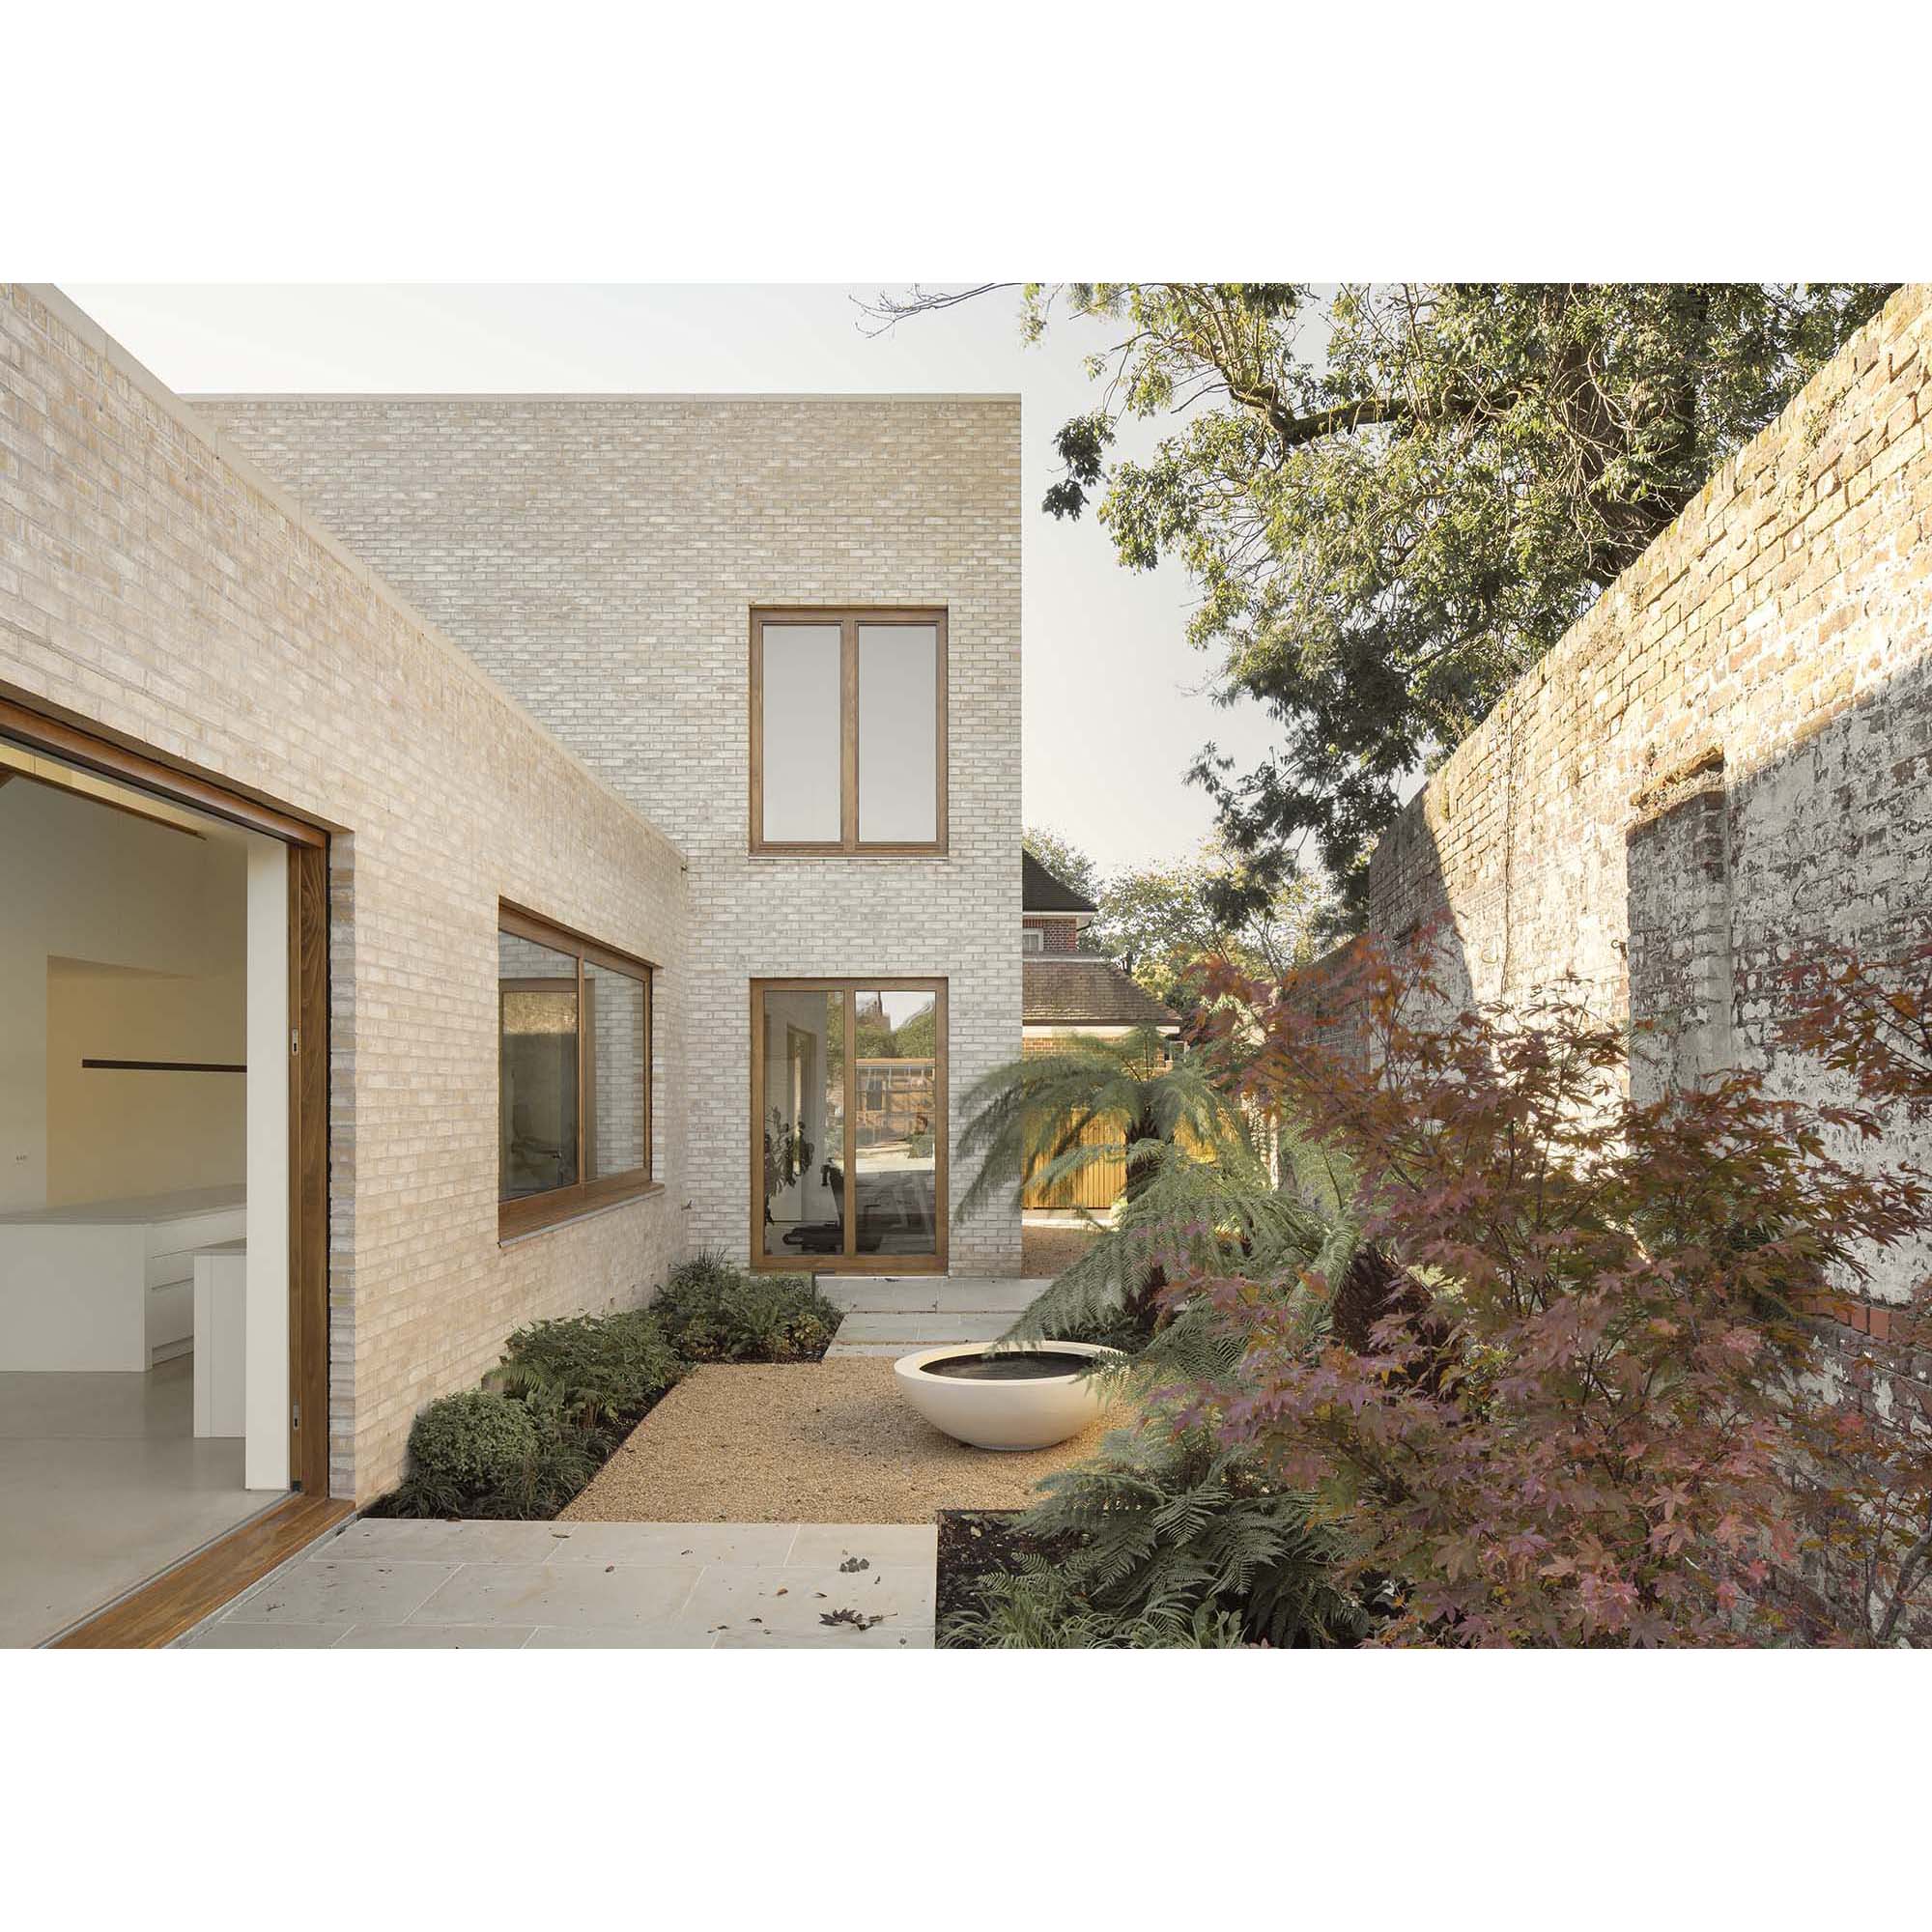 Erbar Mattes Architects Wimbledon London timber frame house axo